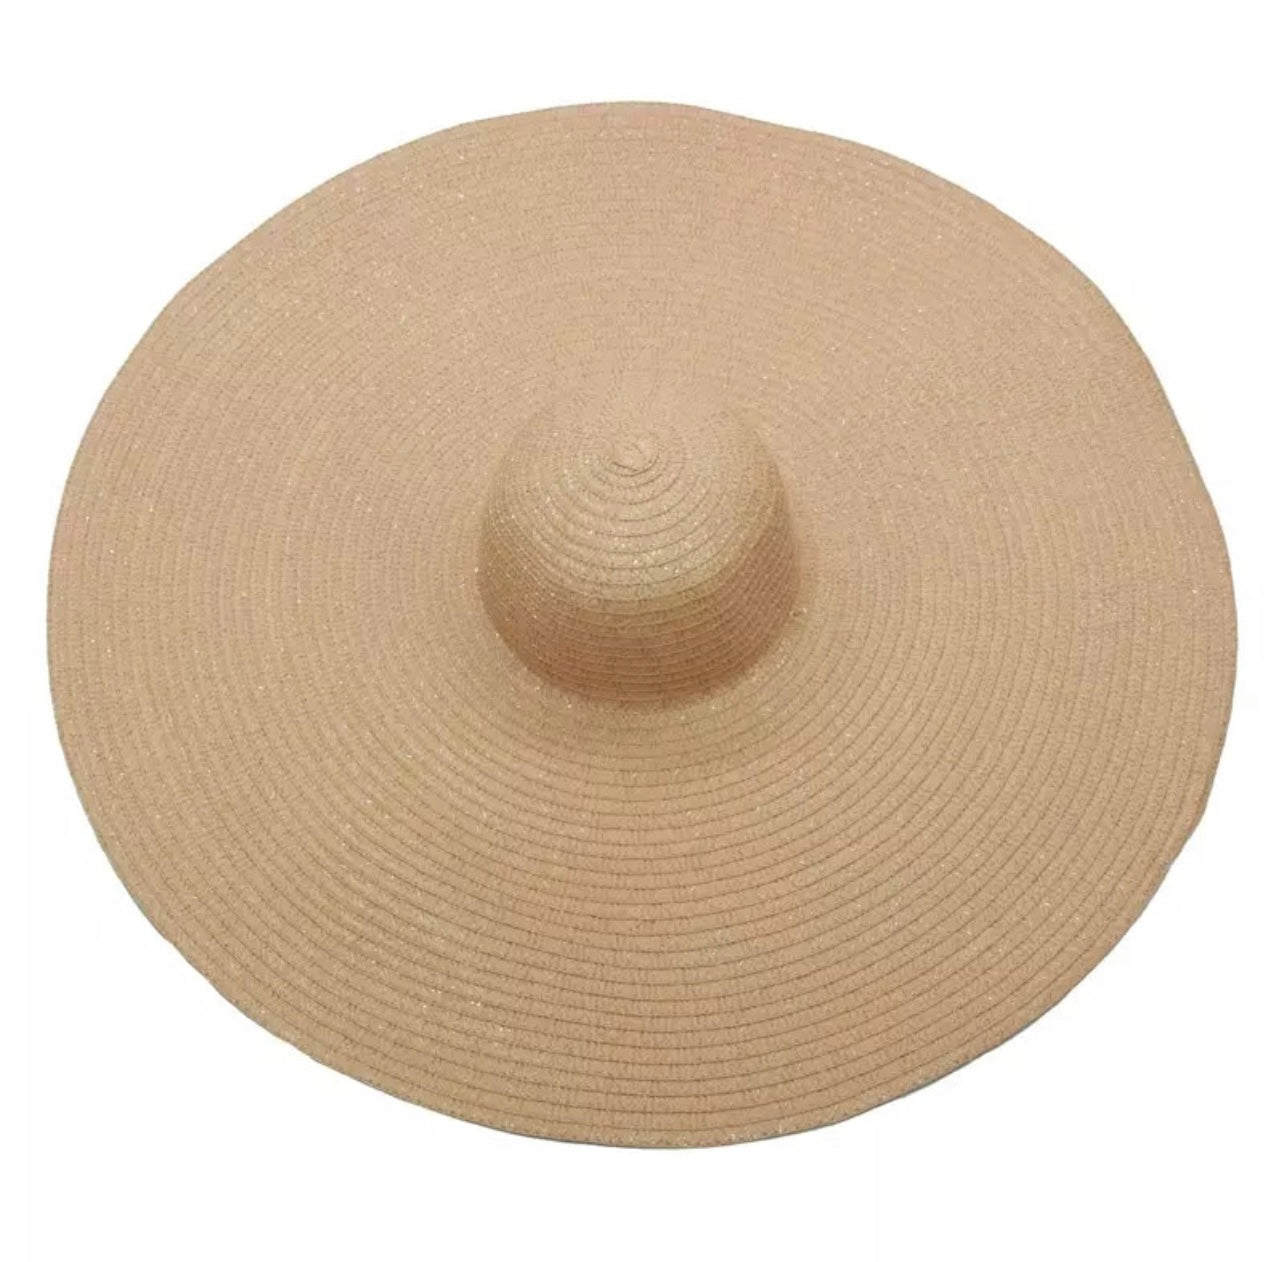 Tan Big A$$ Foldable Hat